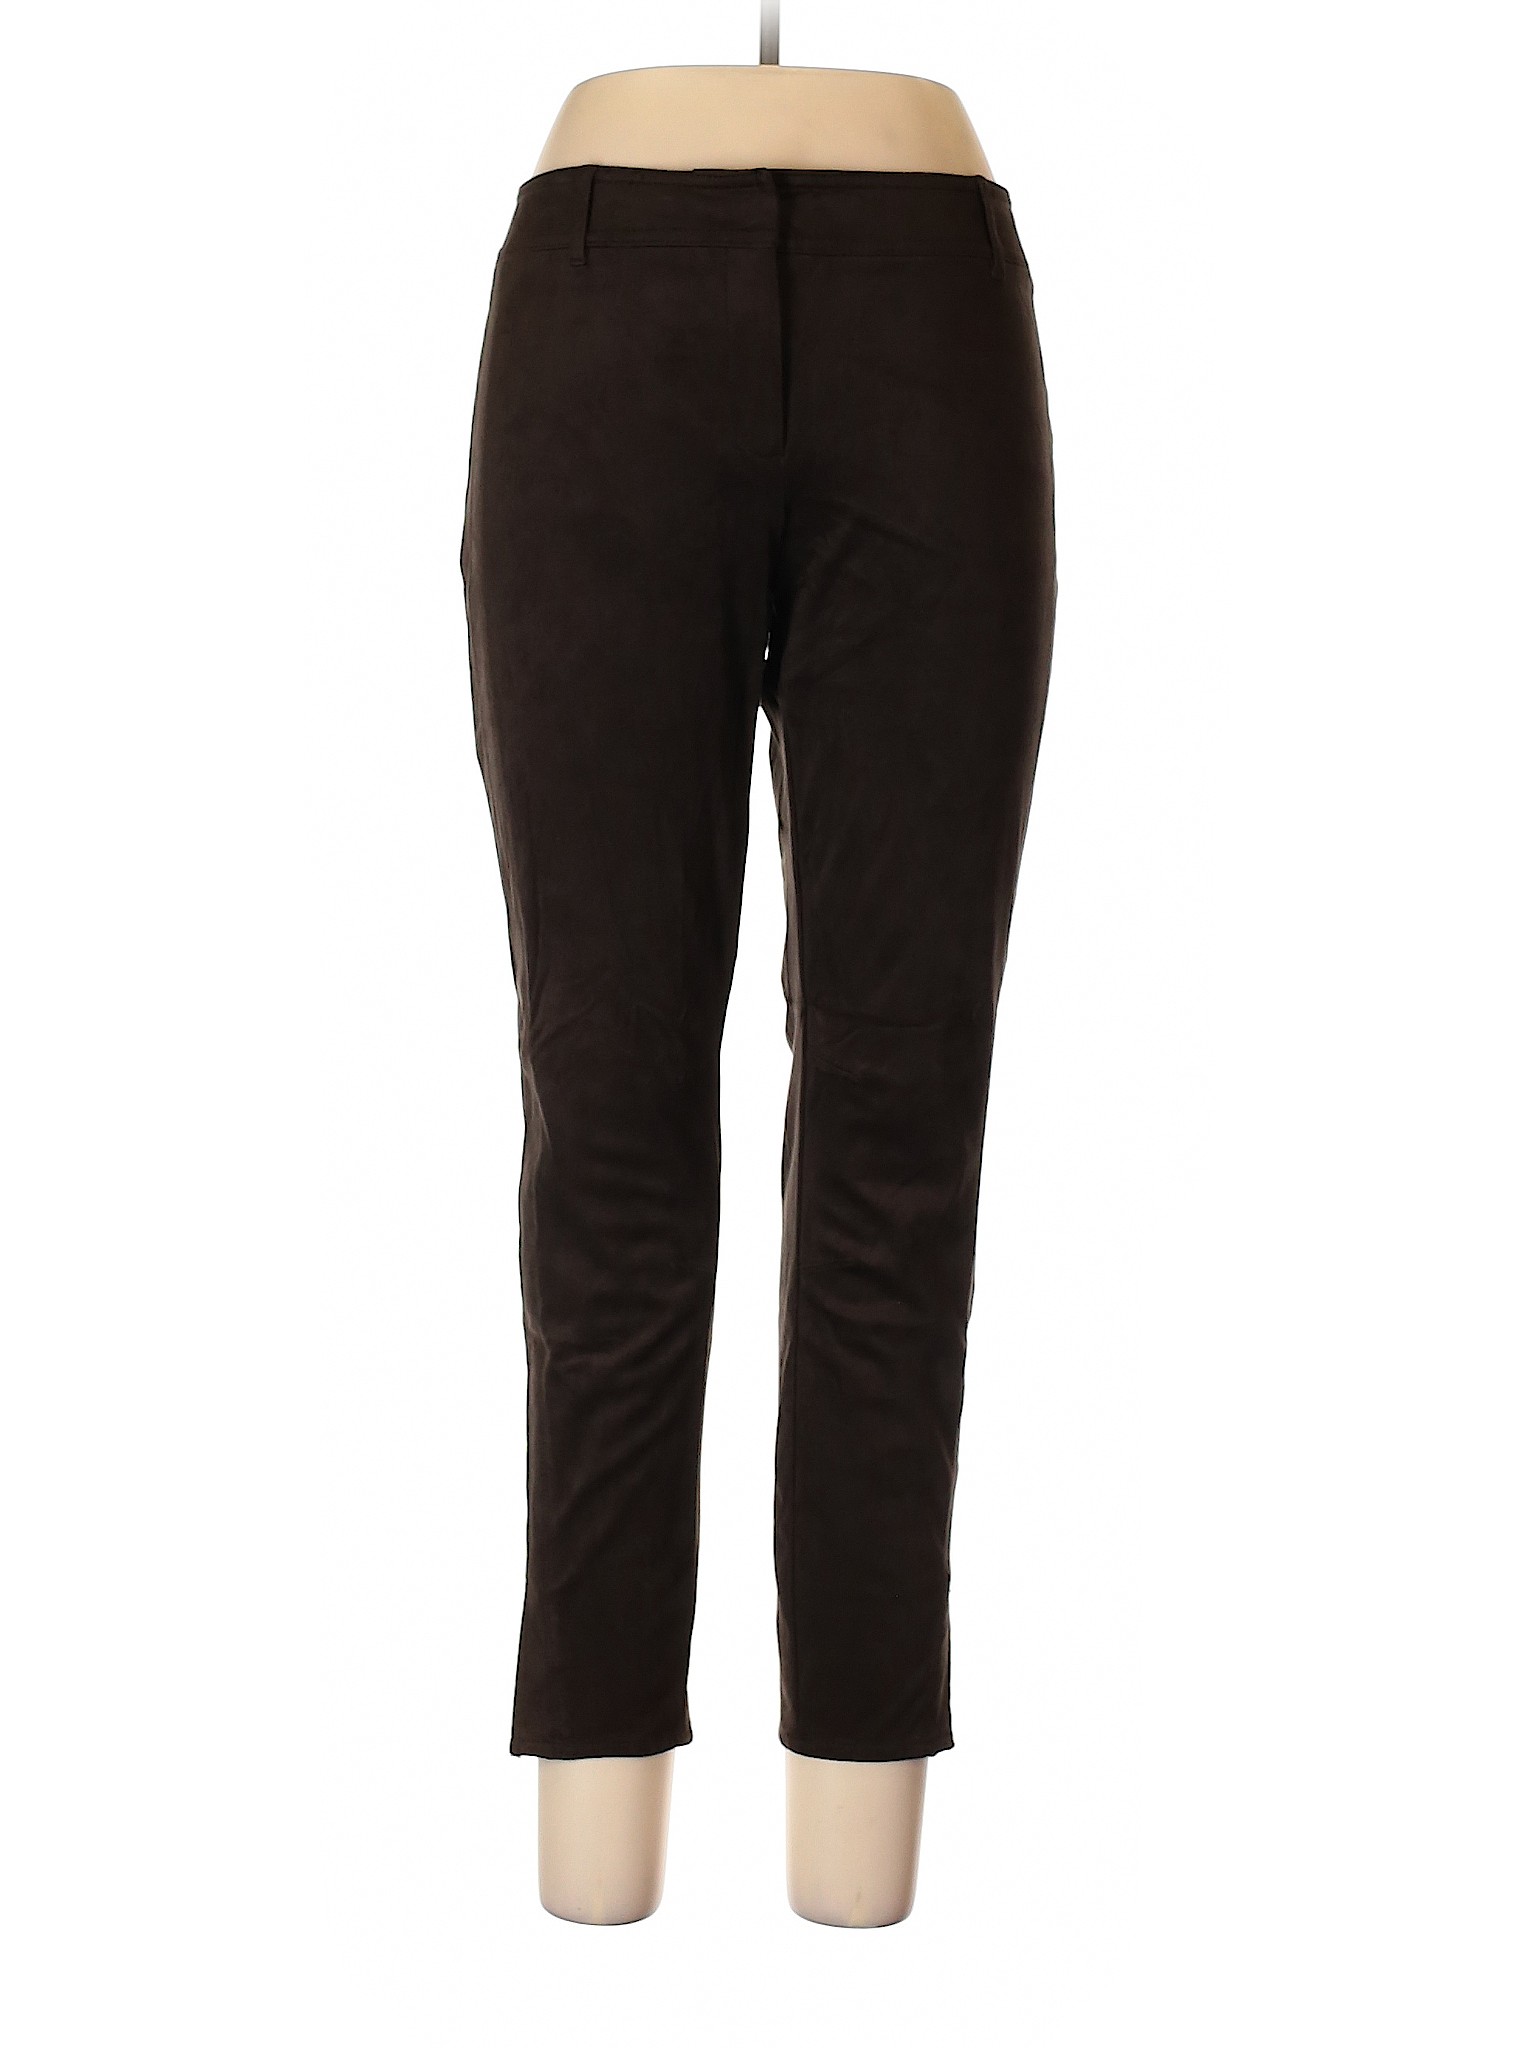 New York & Company Women Brown Velour Pants 10 | eBay